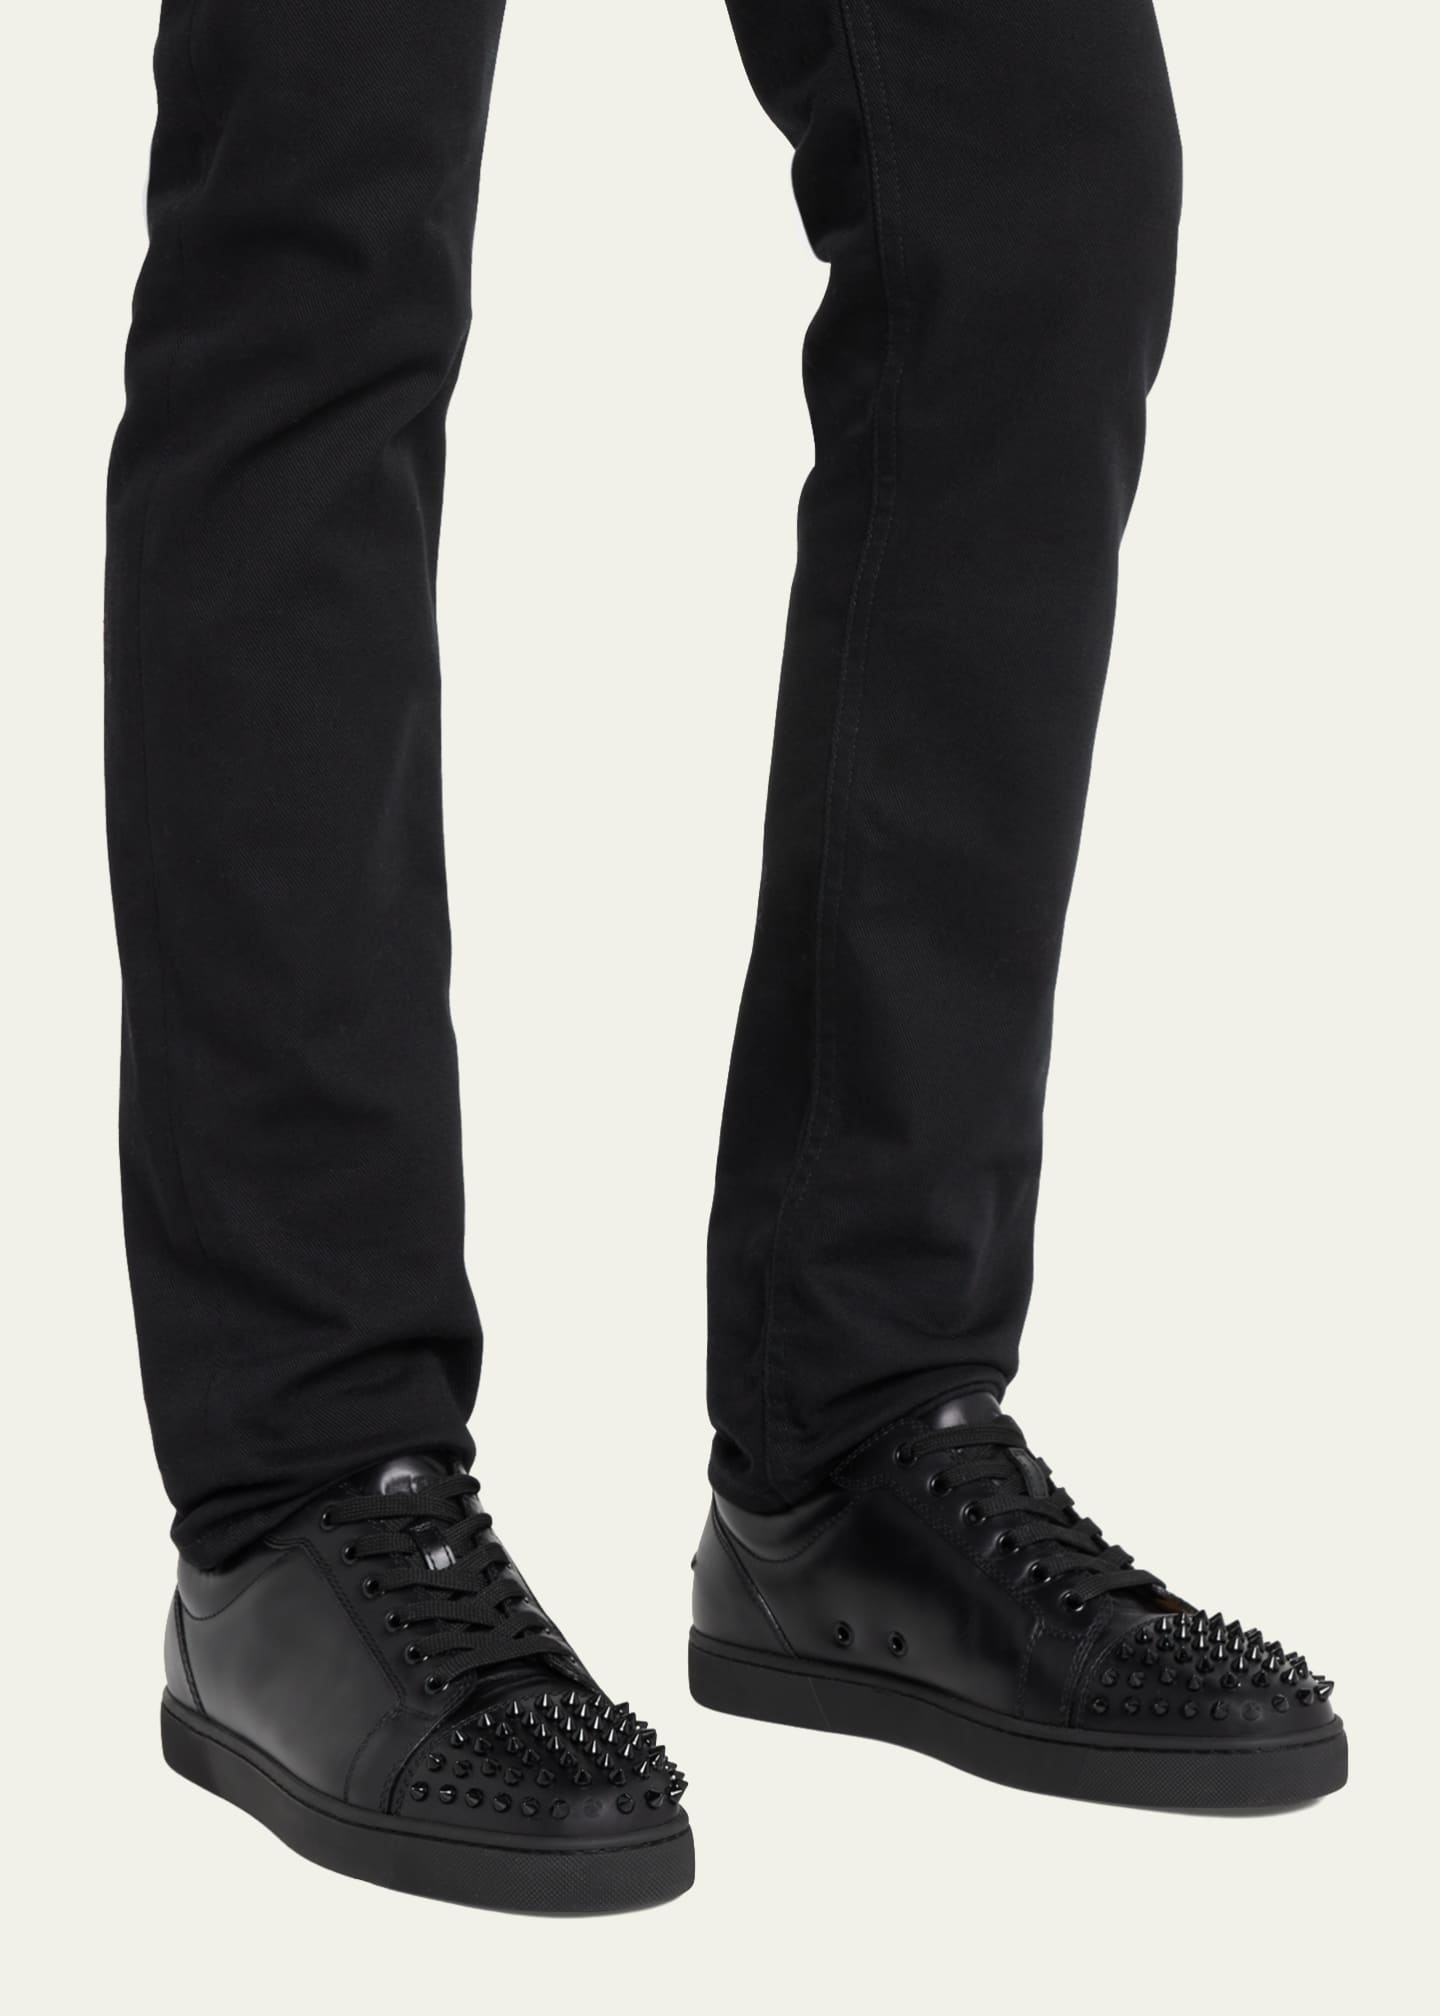 christian louboutin sneakers Spike Black Size 8.5 (41.5)